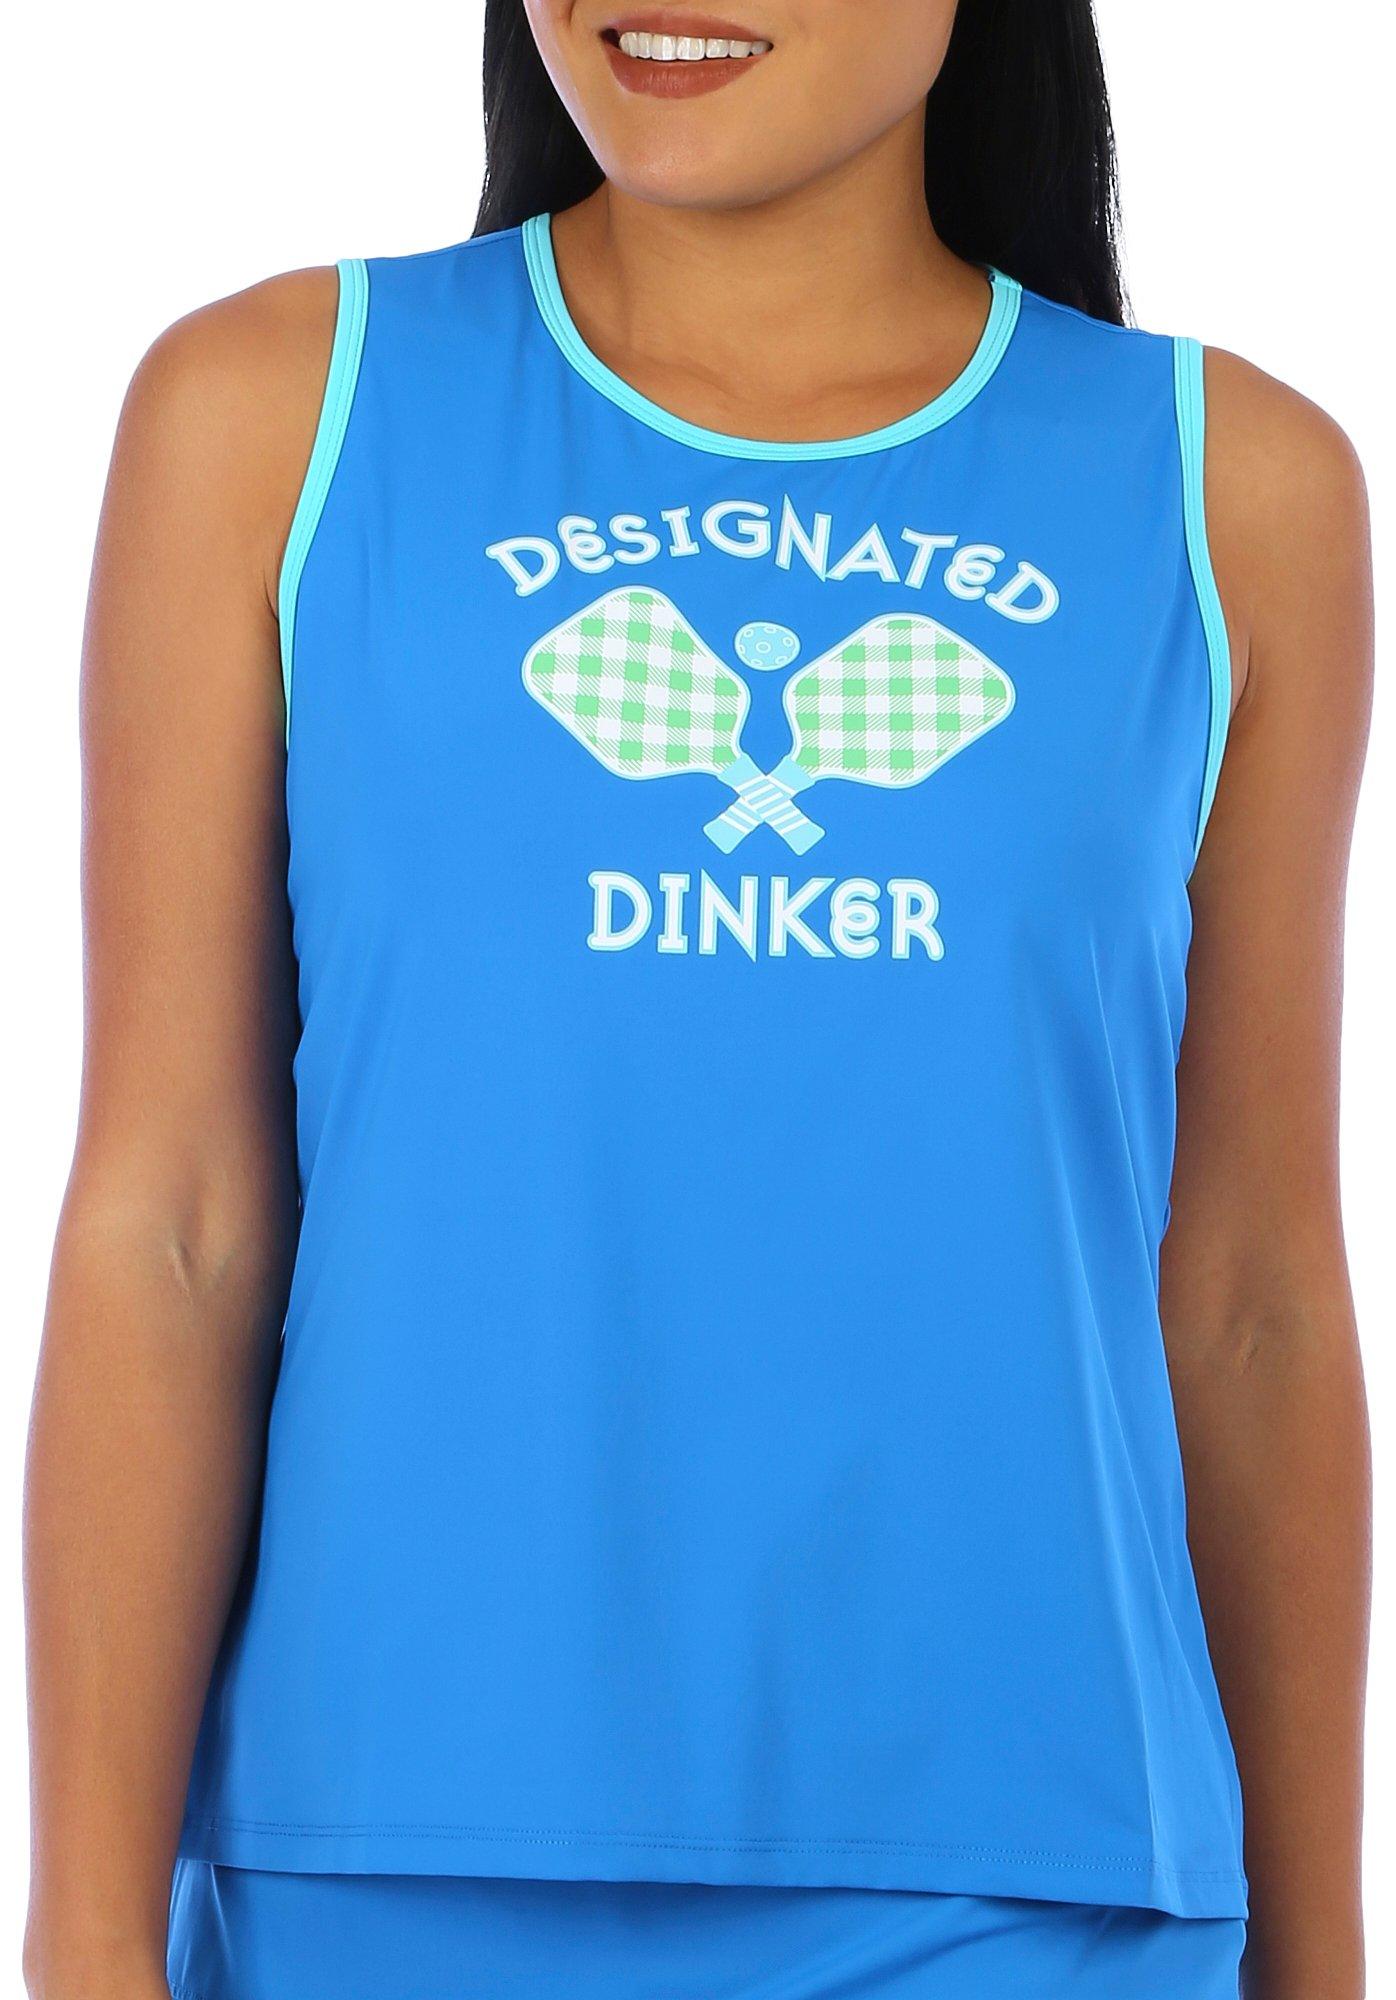 Womens Designated Dinker Top